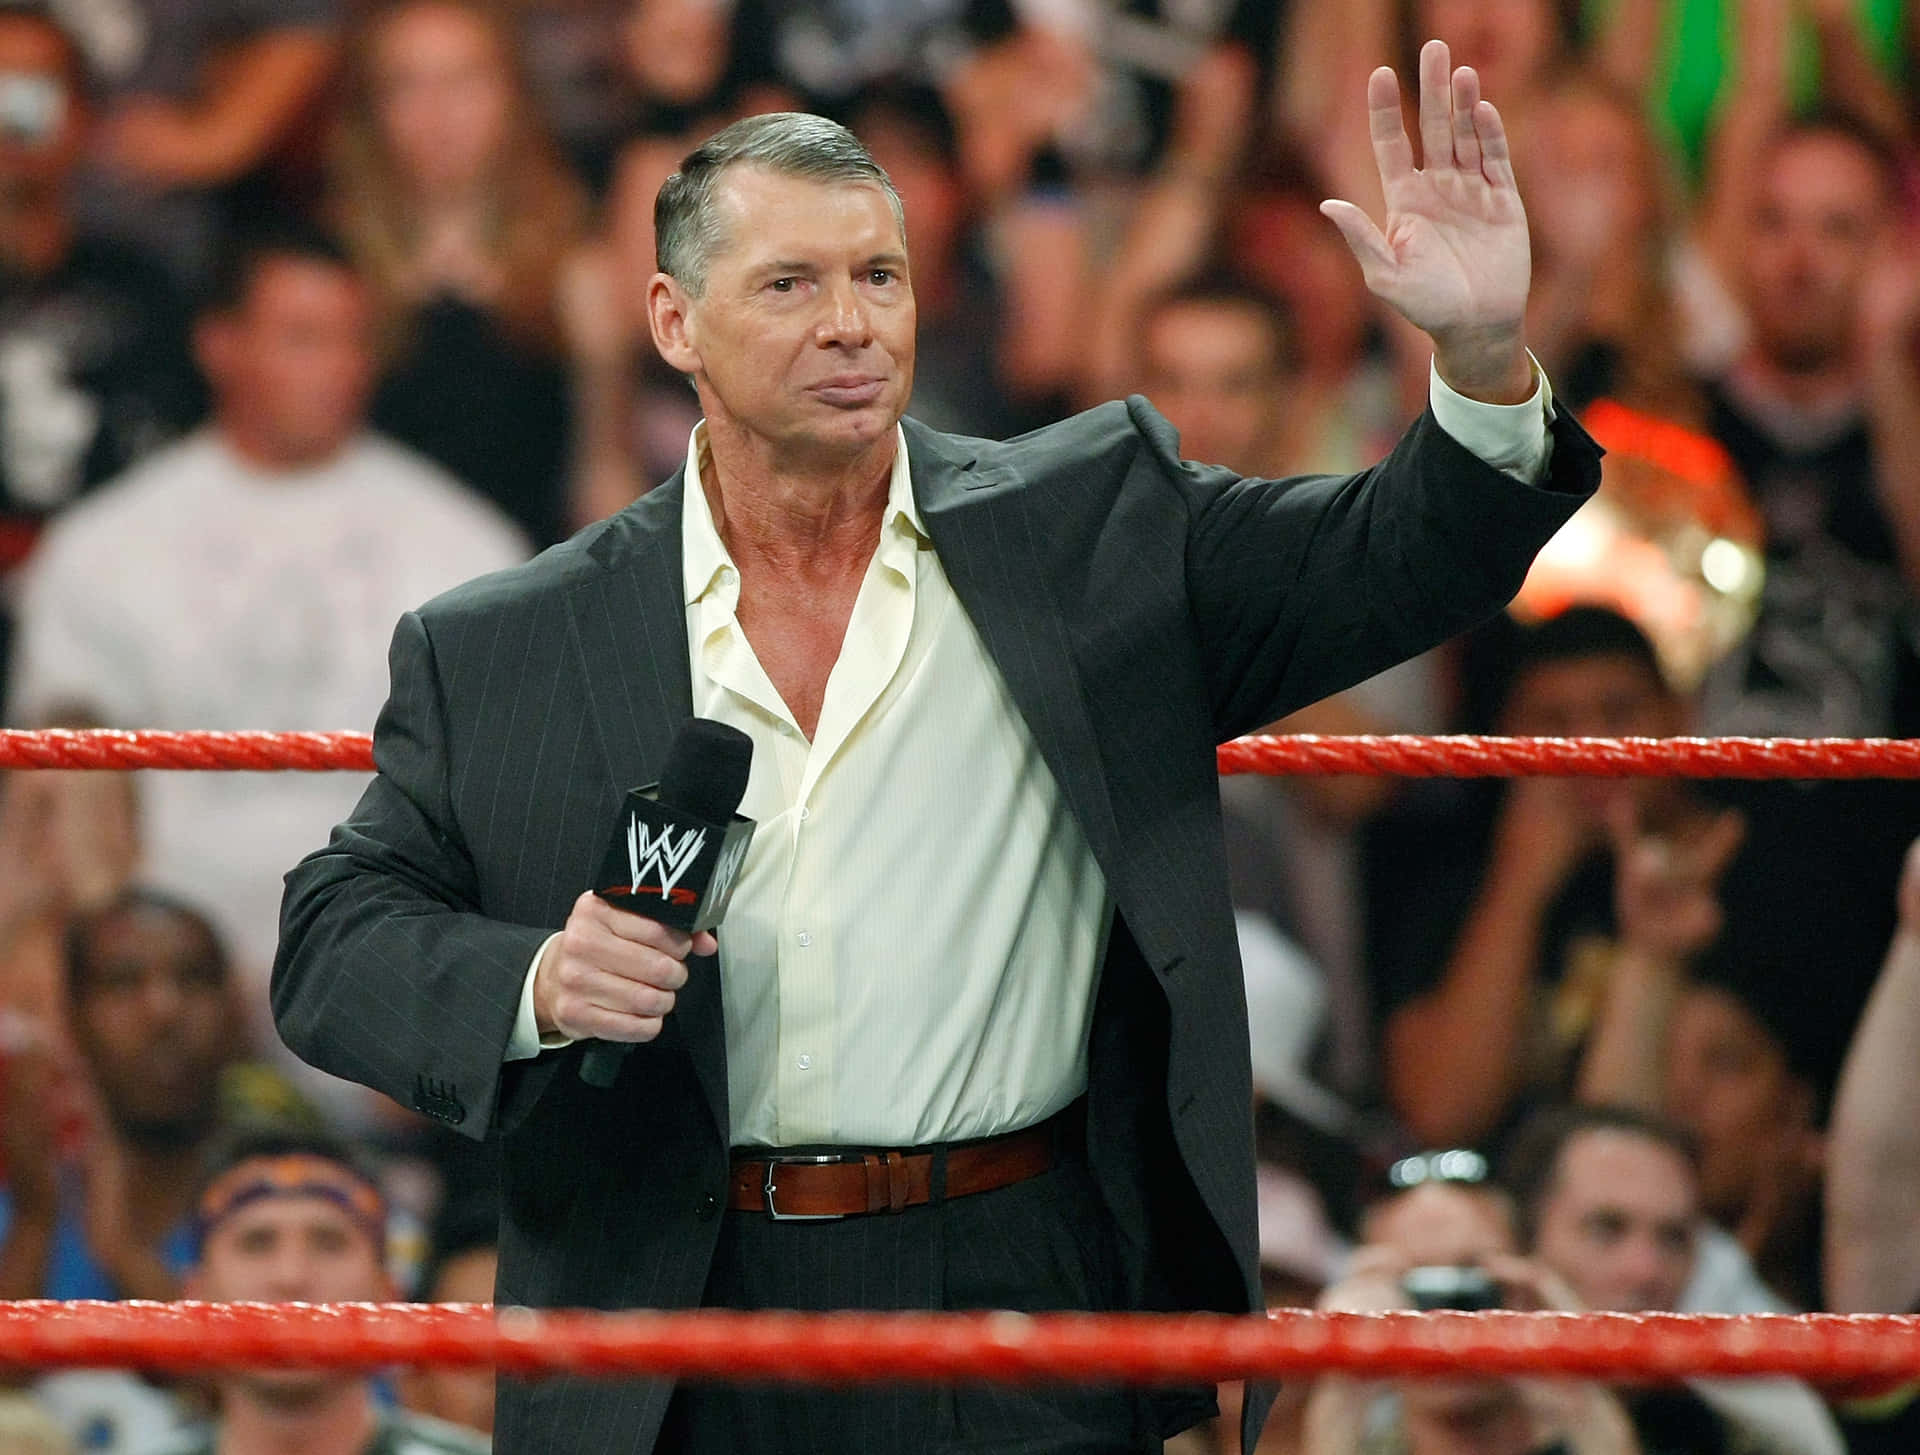 WWE Chairman Vince McMahon joyfully waving at the rapturous audience. Wallpaper